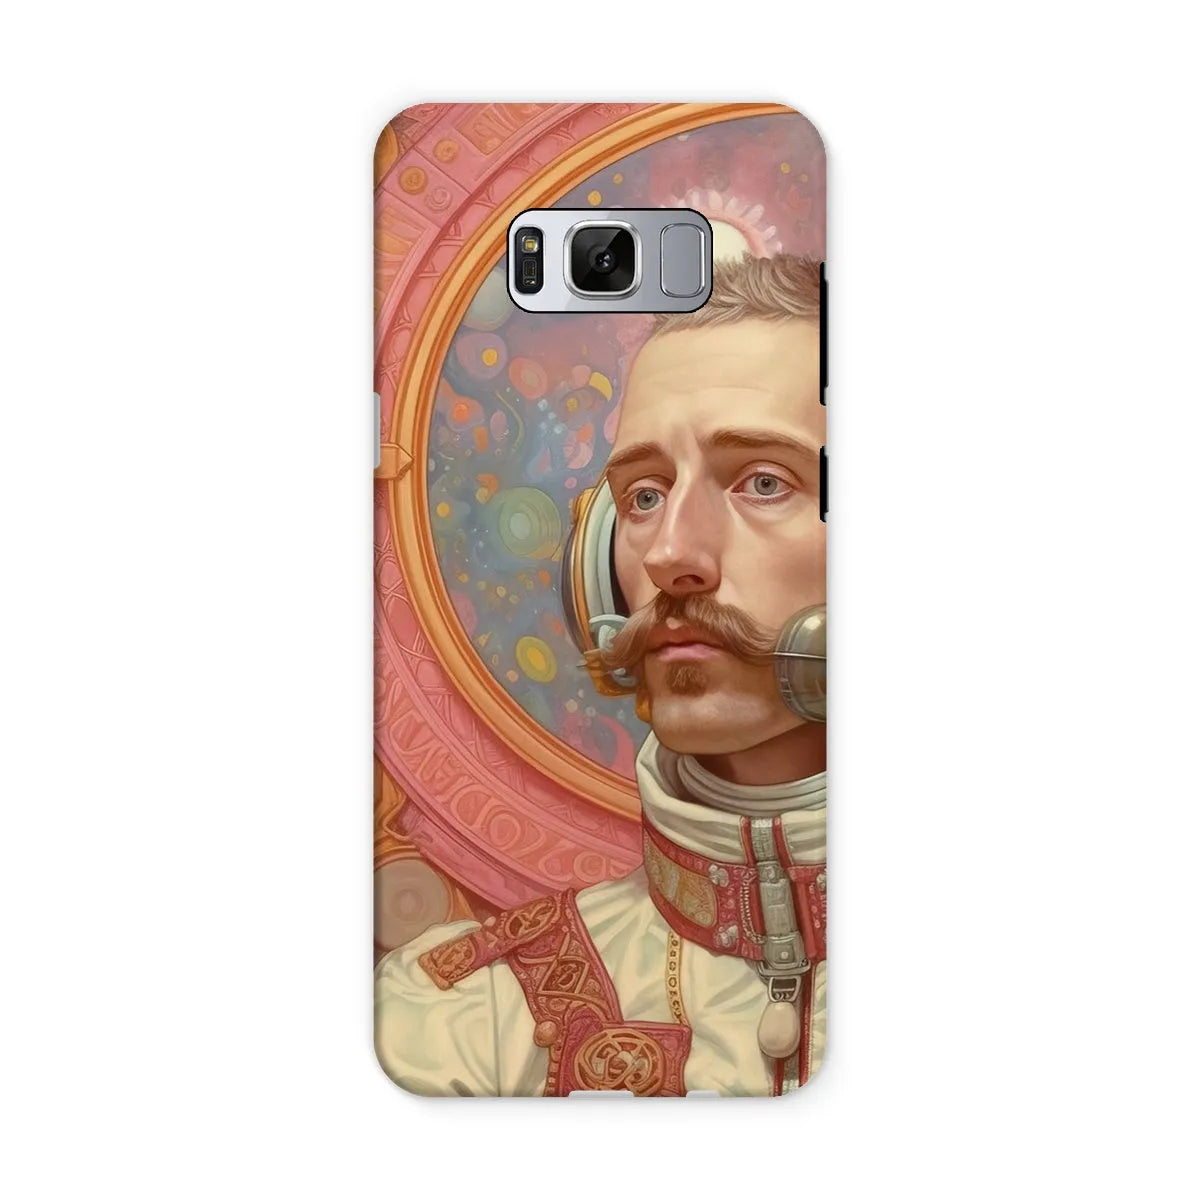 Axel - Gay German Astronaut Aesthetic Art Phone Case - Samsung Galaxy S8 / Matte - Mobile Phone Cases - Aesthetic Art